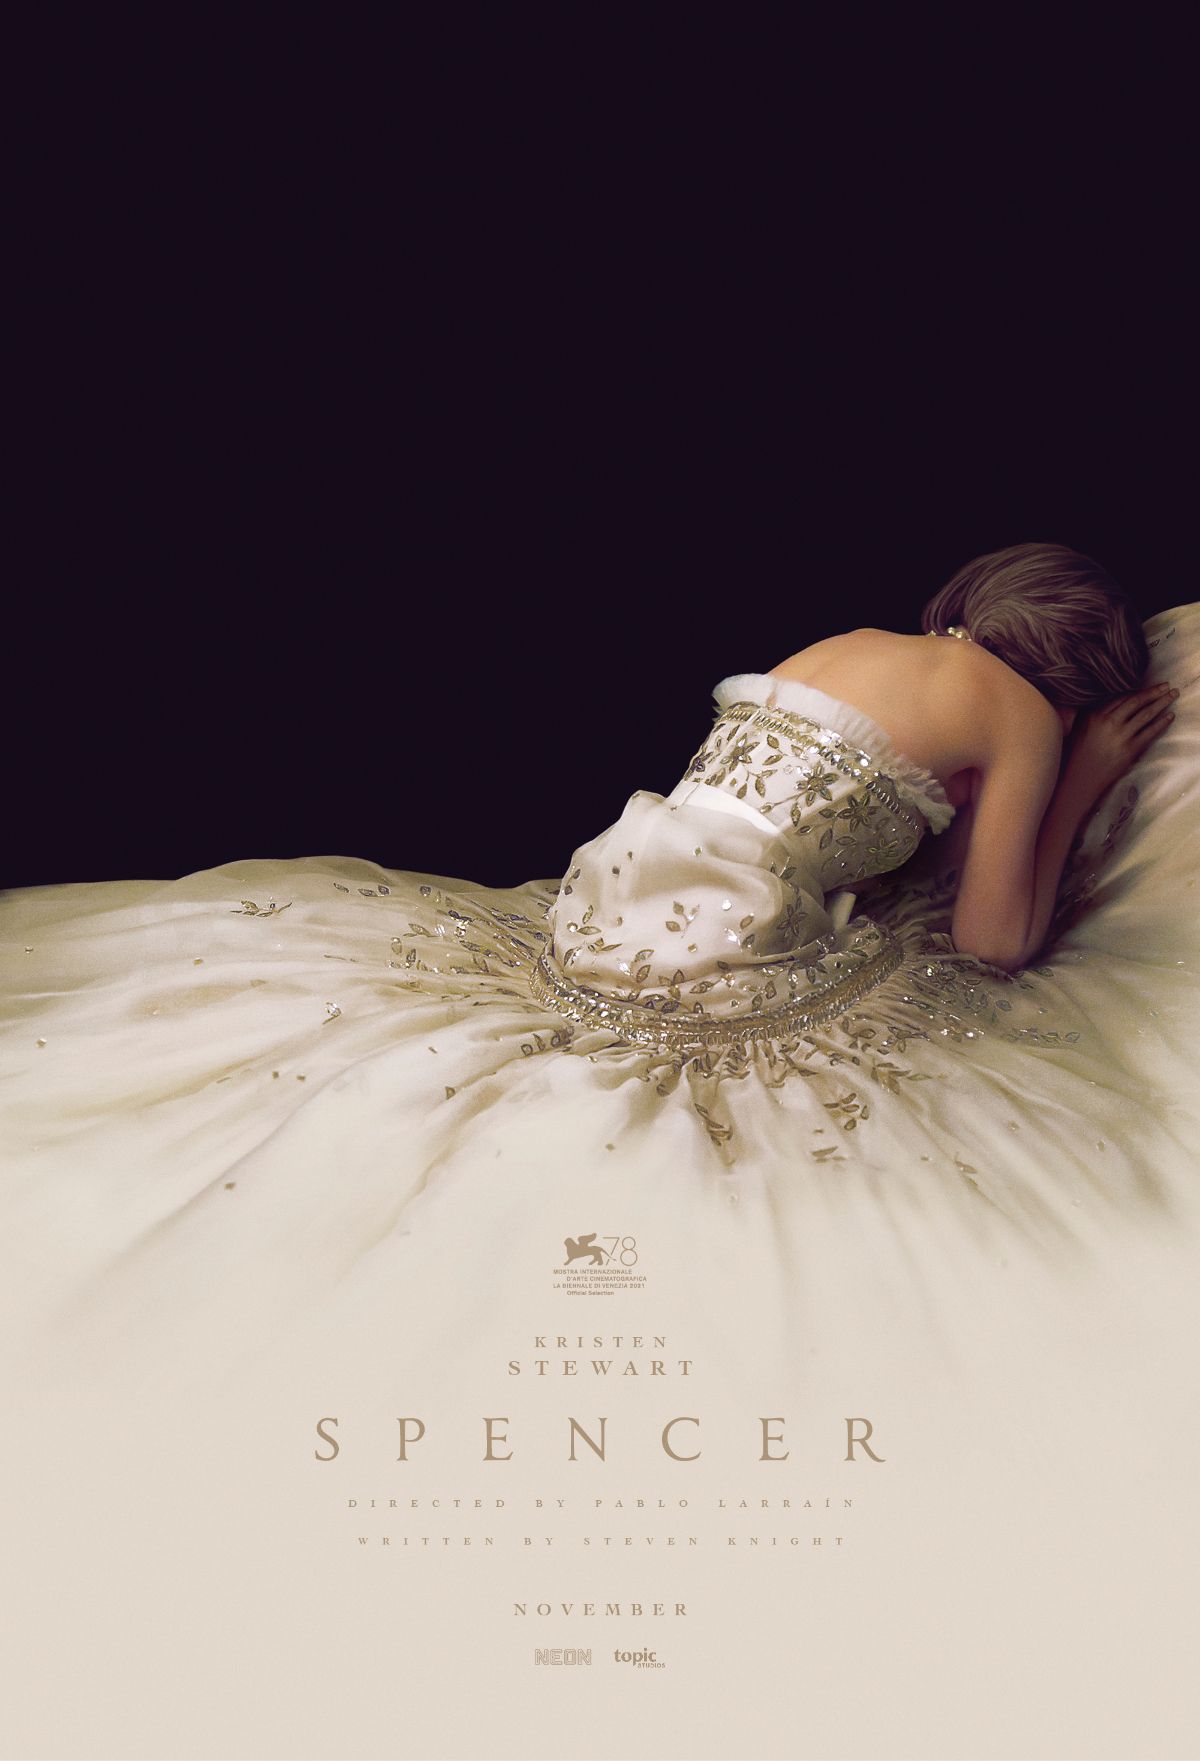 Spencer Poster Promises an Emotional Princess Di Biopic ...